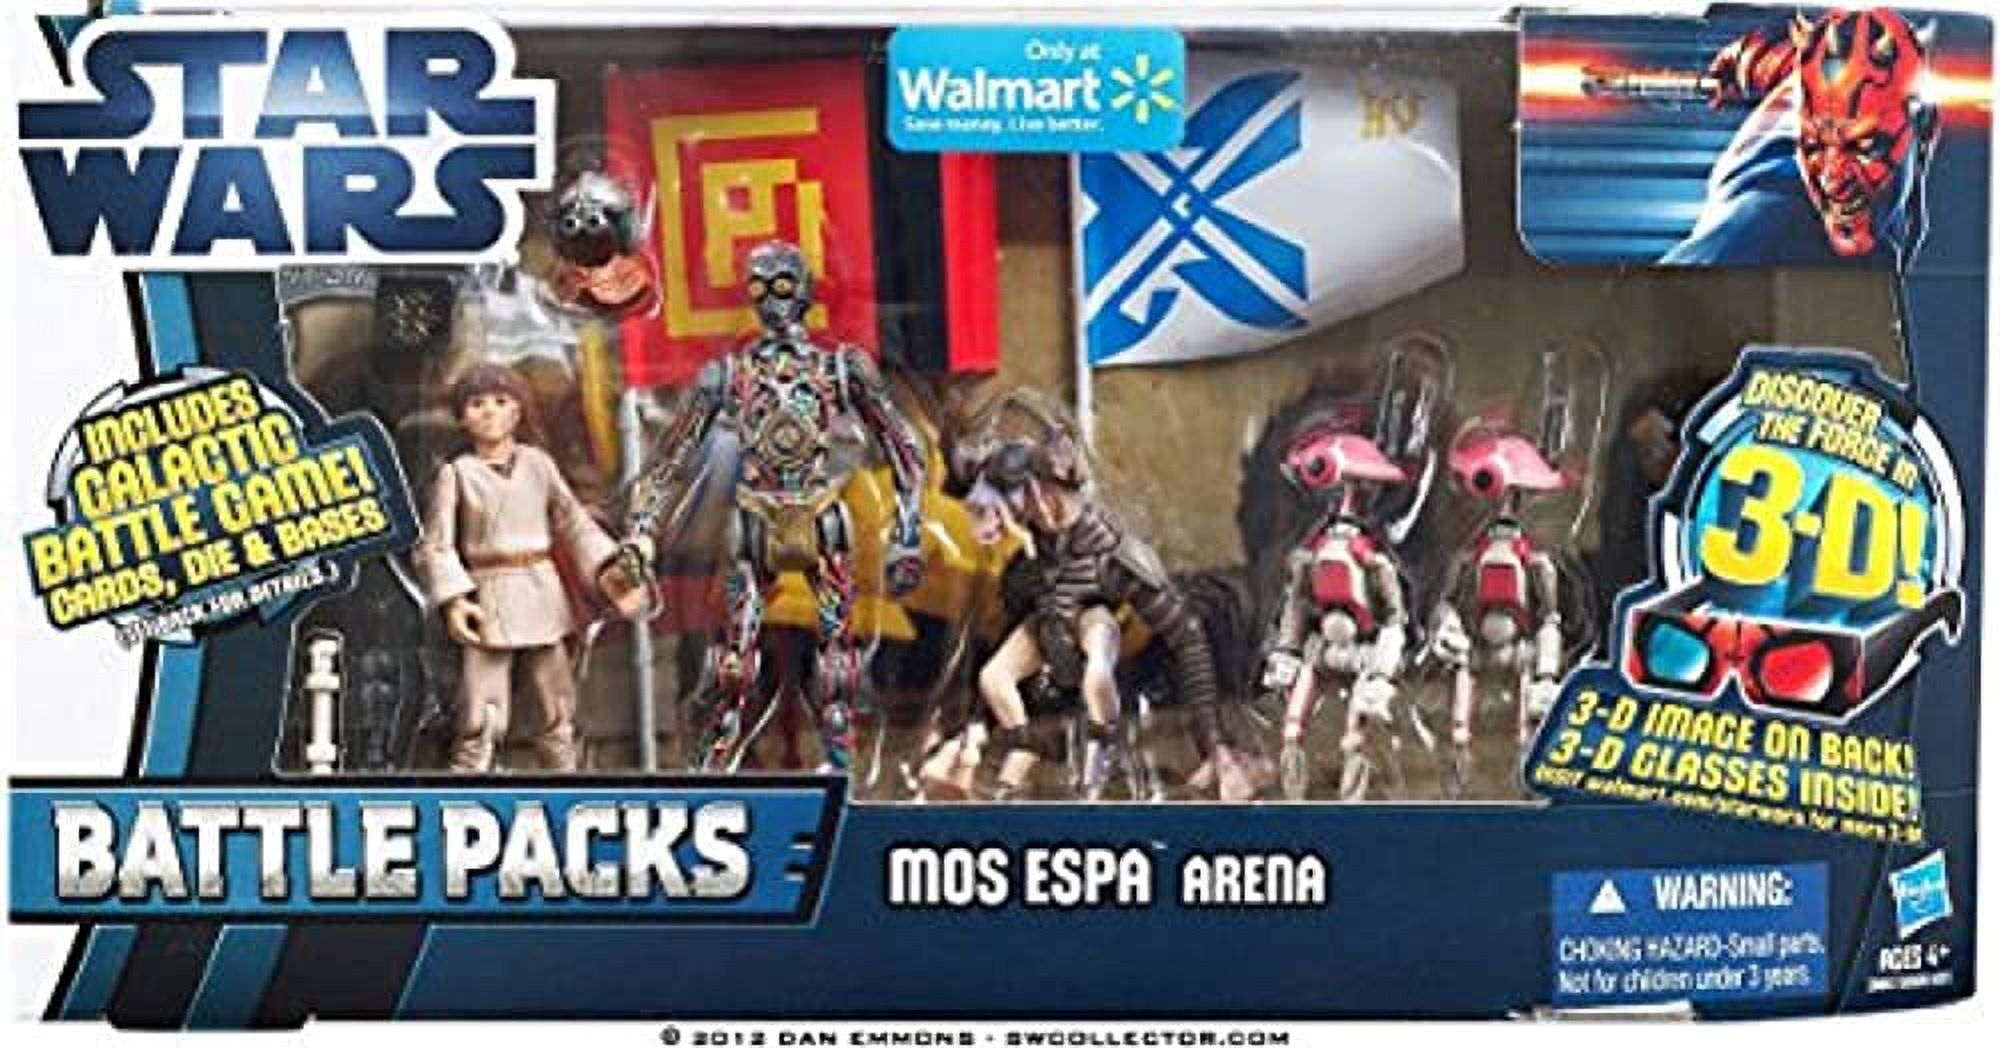 Star Wars 2012 Clone Wars Battle Pack Mos Espa Arena C3P0 Anakin S - image 1 of 2